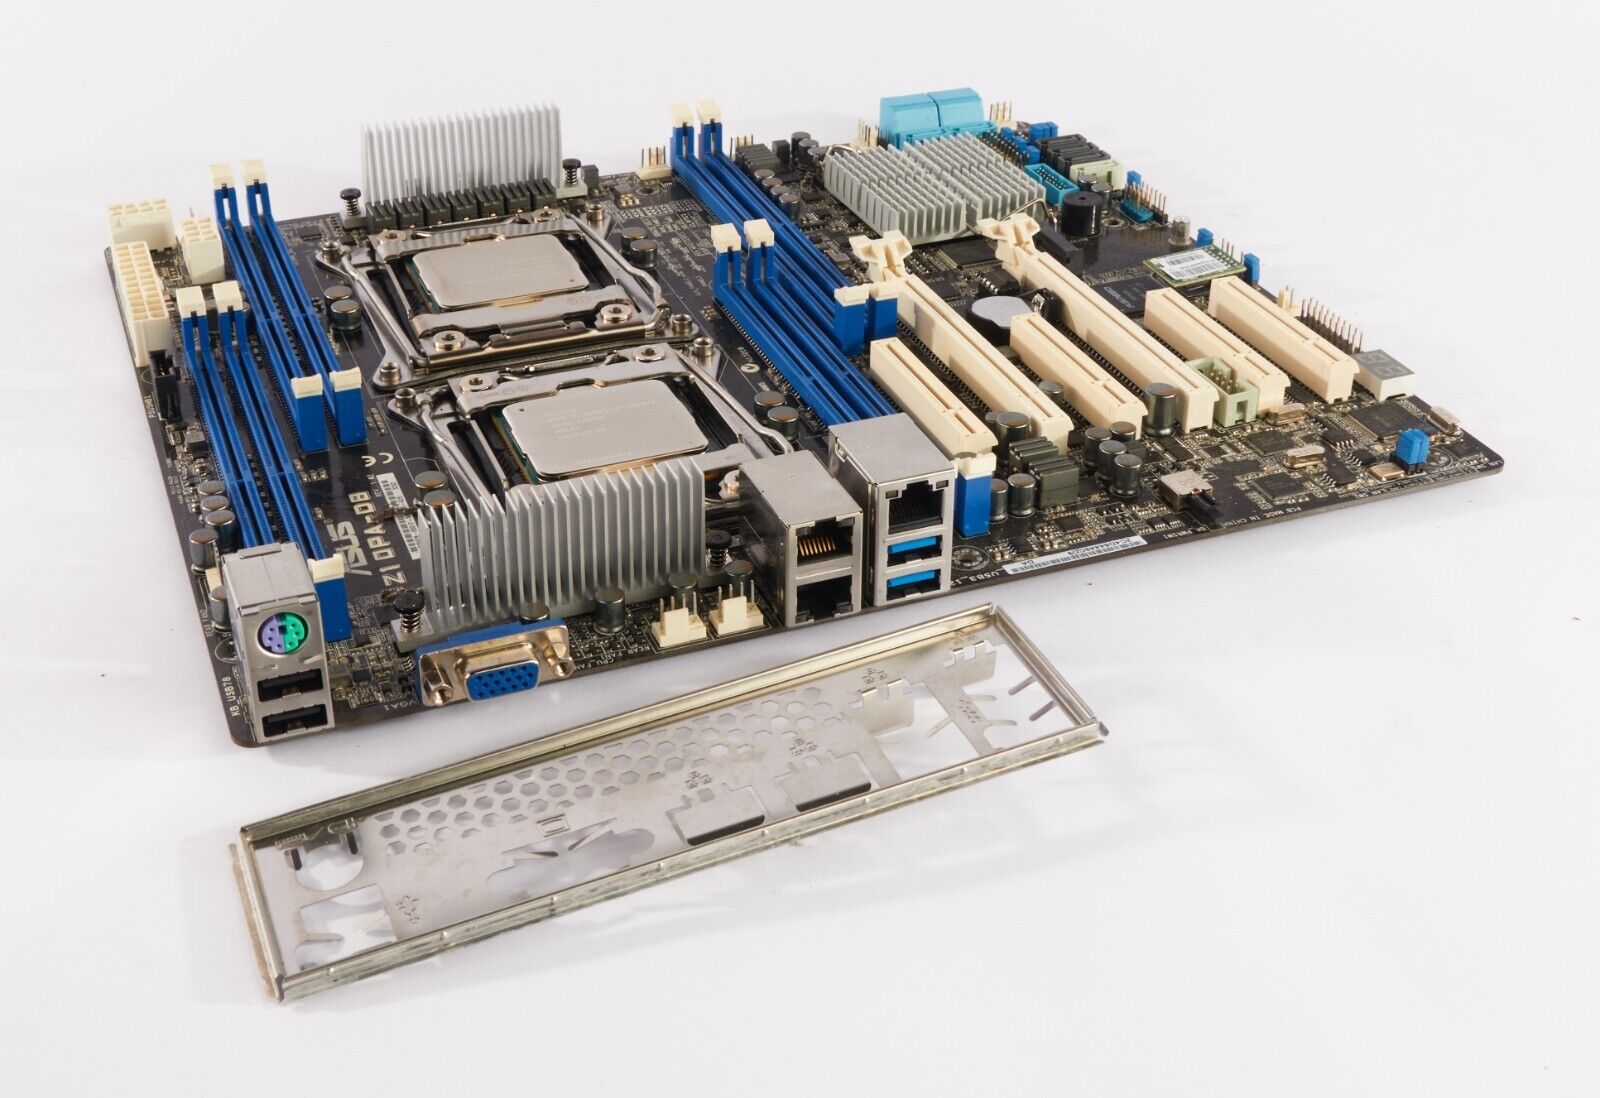 ASUS Z10PA-D8 ATX DDR4 LGA 2011-3 C612 Motherboard w/2x Xeon E5-2640 V3 CPUs